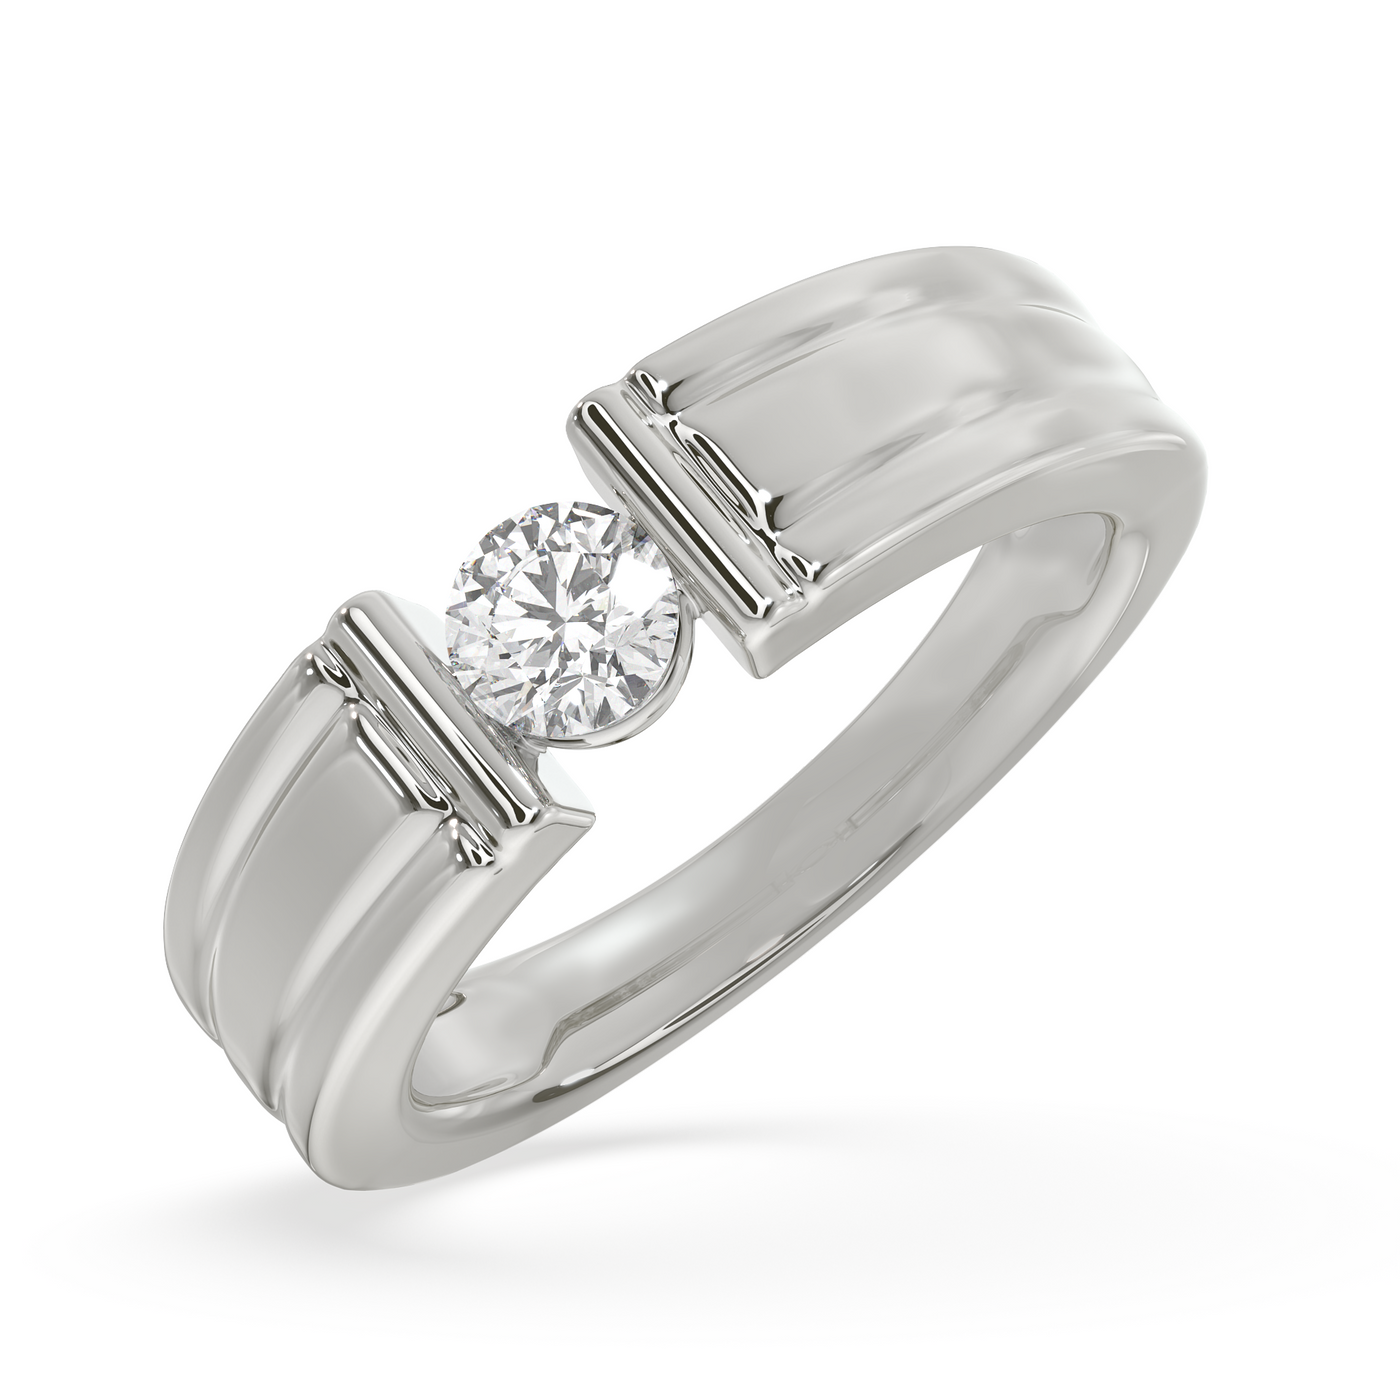 SY Men's Ring in Gold, Tension-Set Diamond Ring